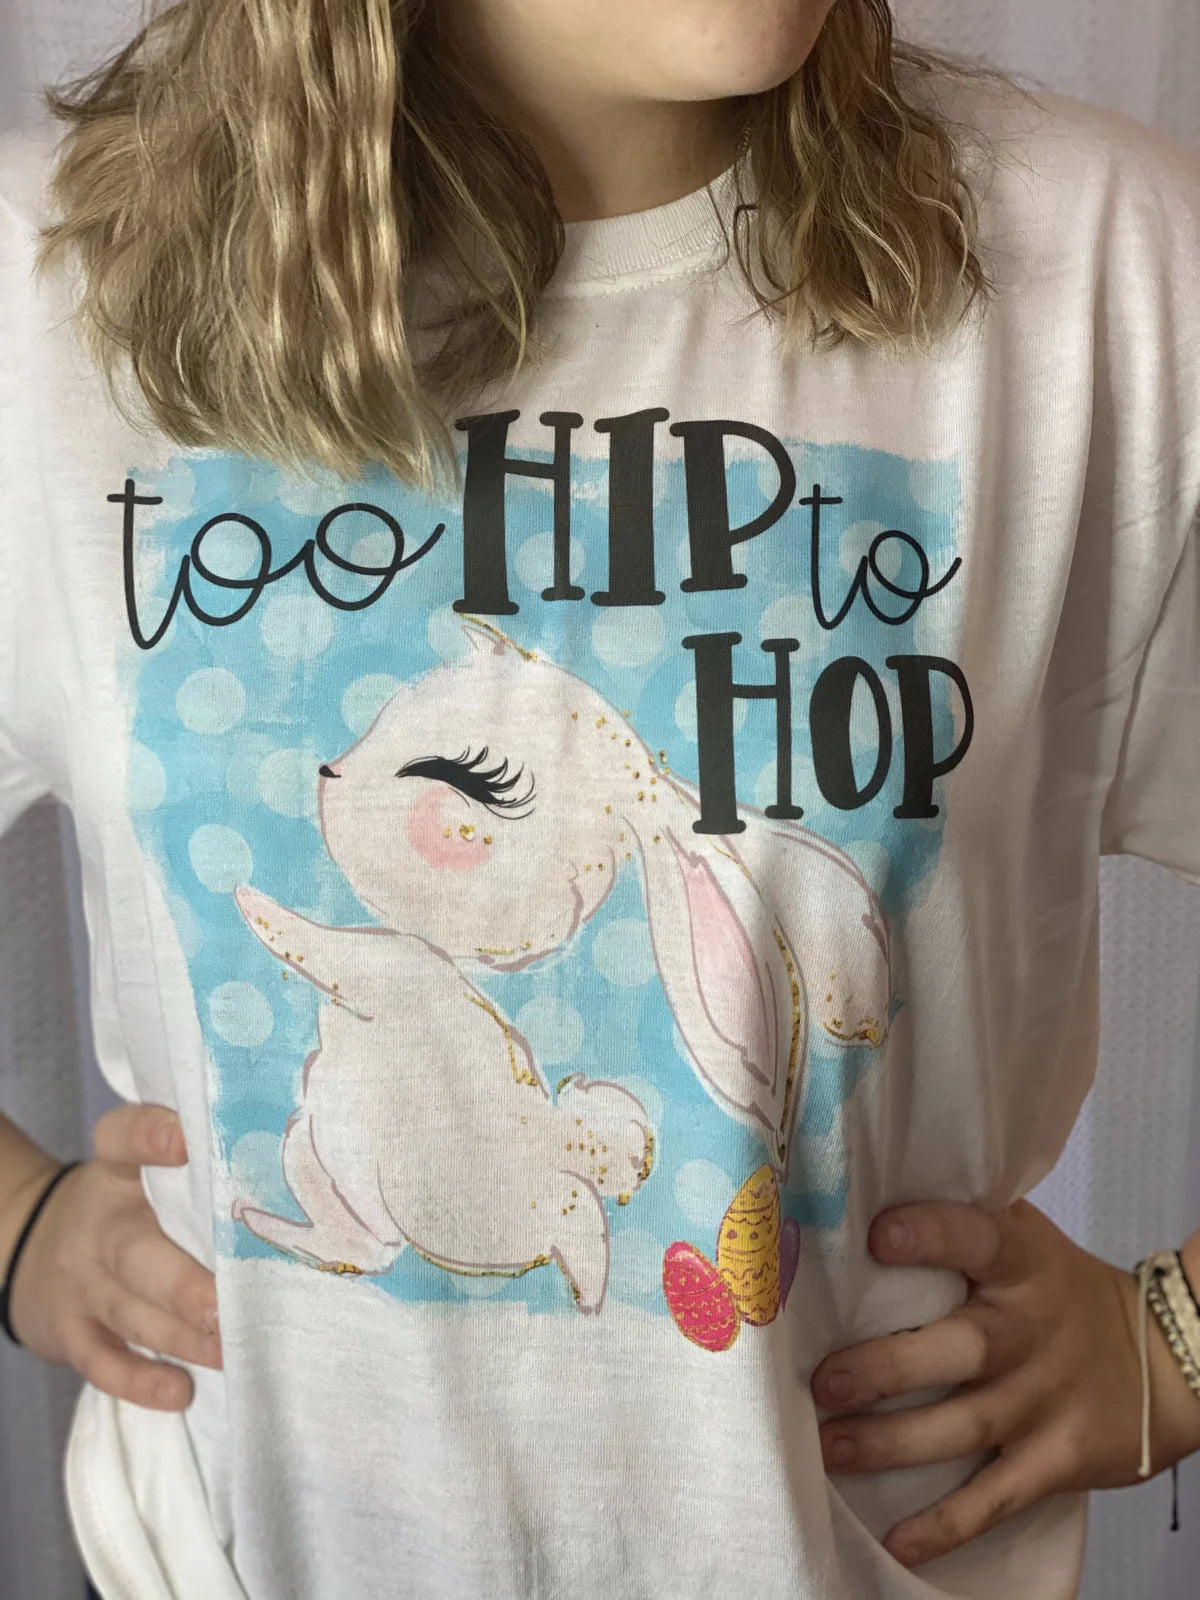 Too hip to hop tees